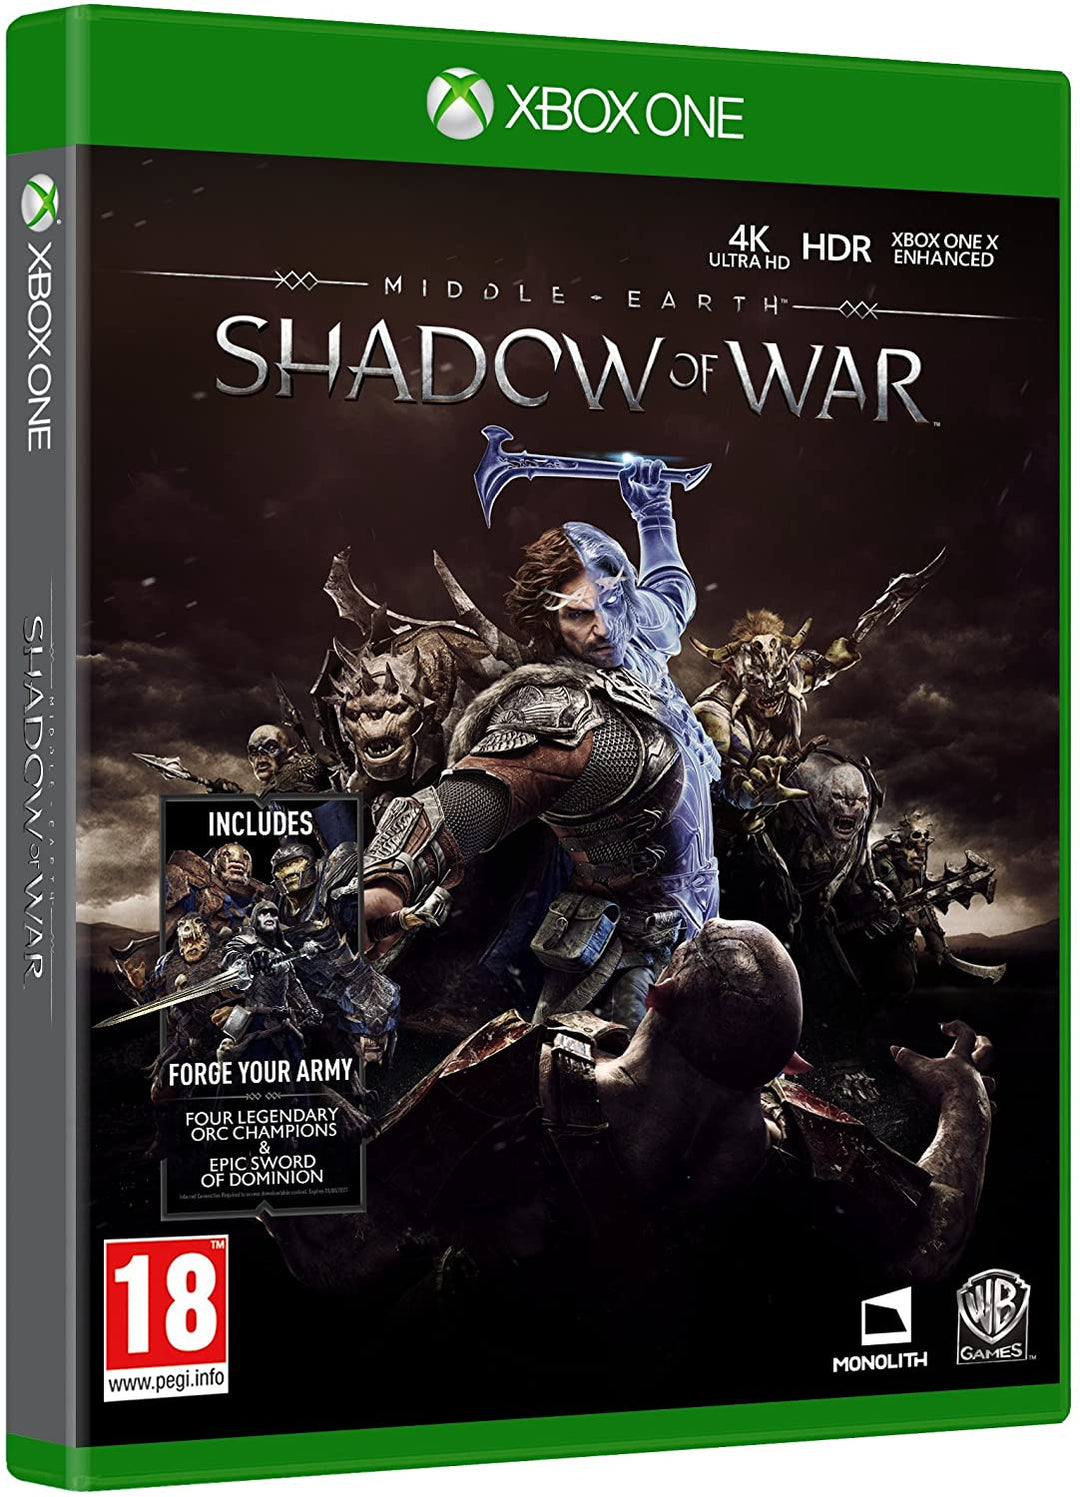 Midden-aarde Shadow of War (Xbox One)